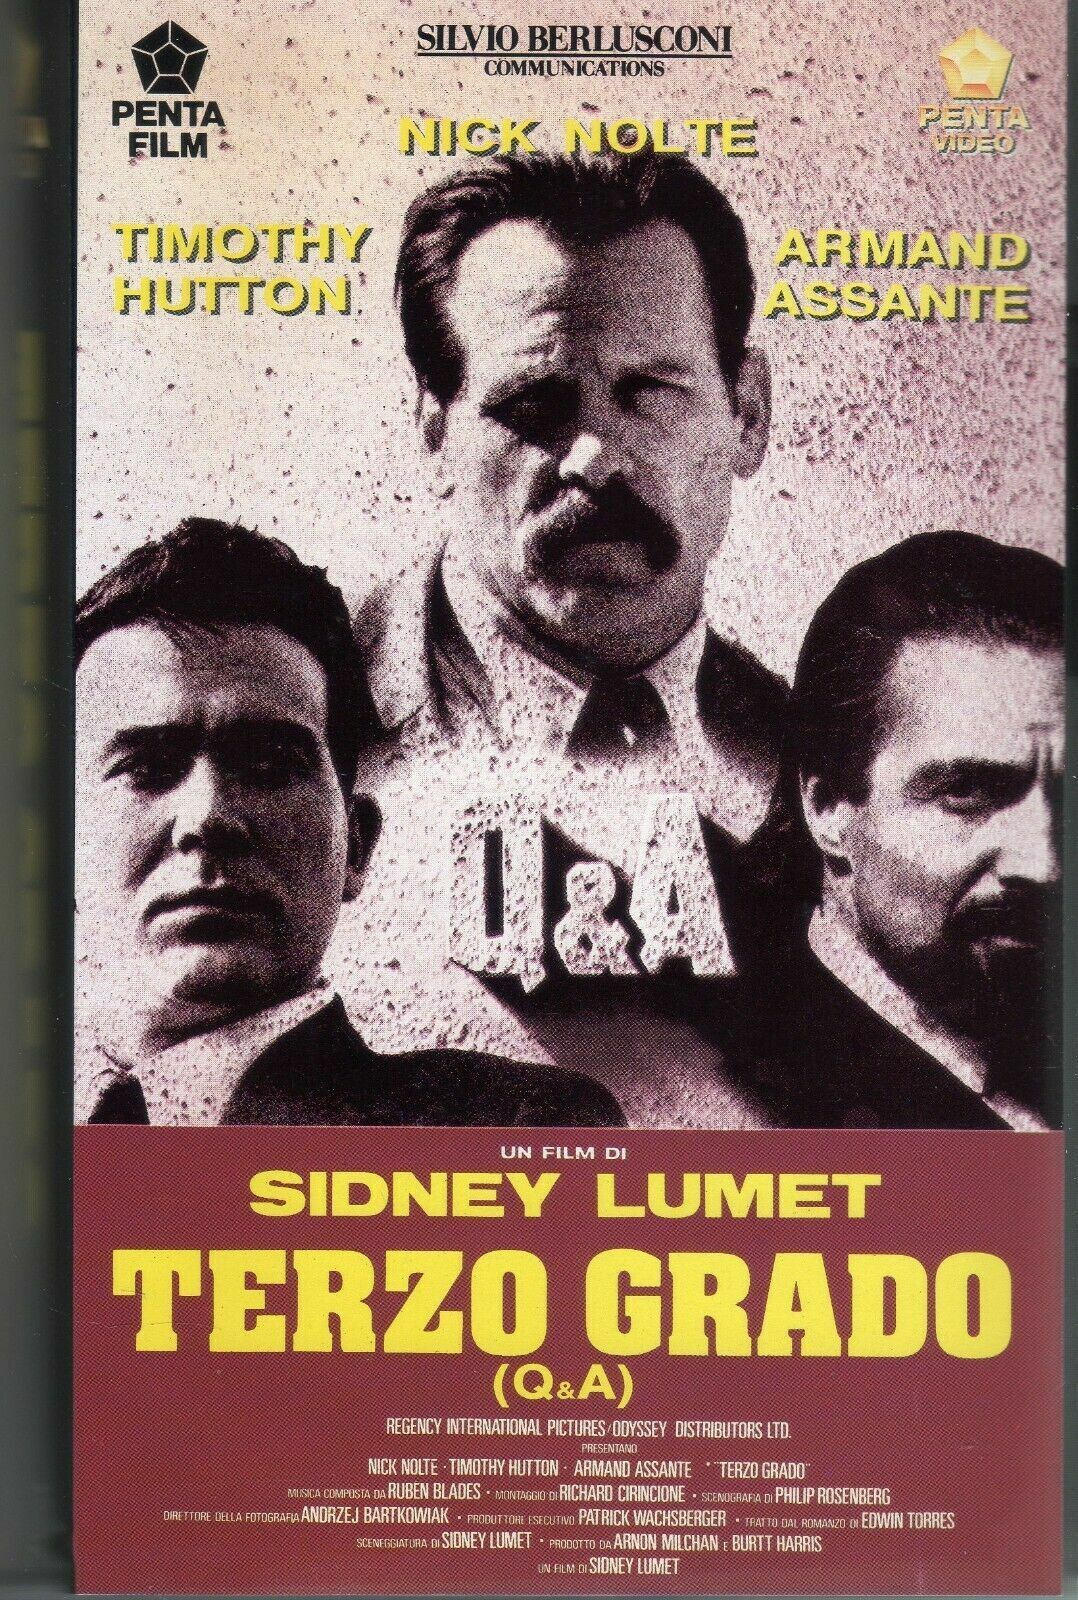 Terzo Grado -1990 - VHS Penta Video Sidney Lumet Nick Nolte Timothy Hutton -F